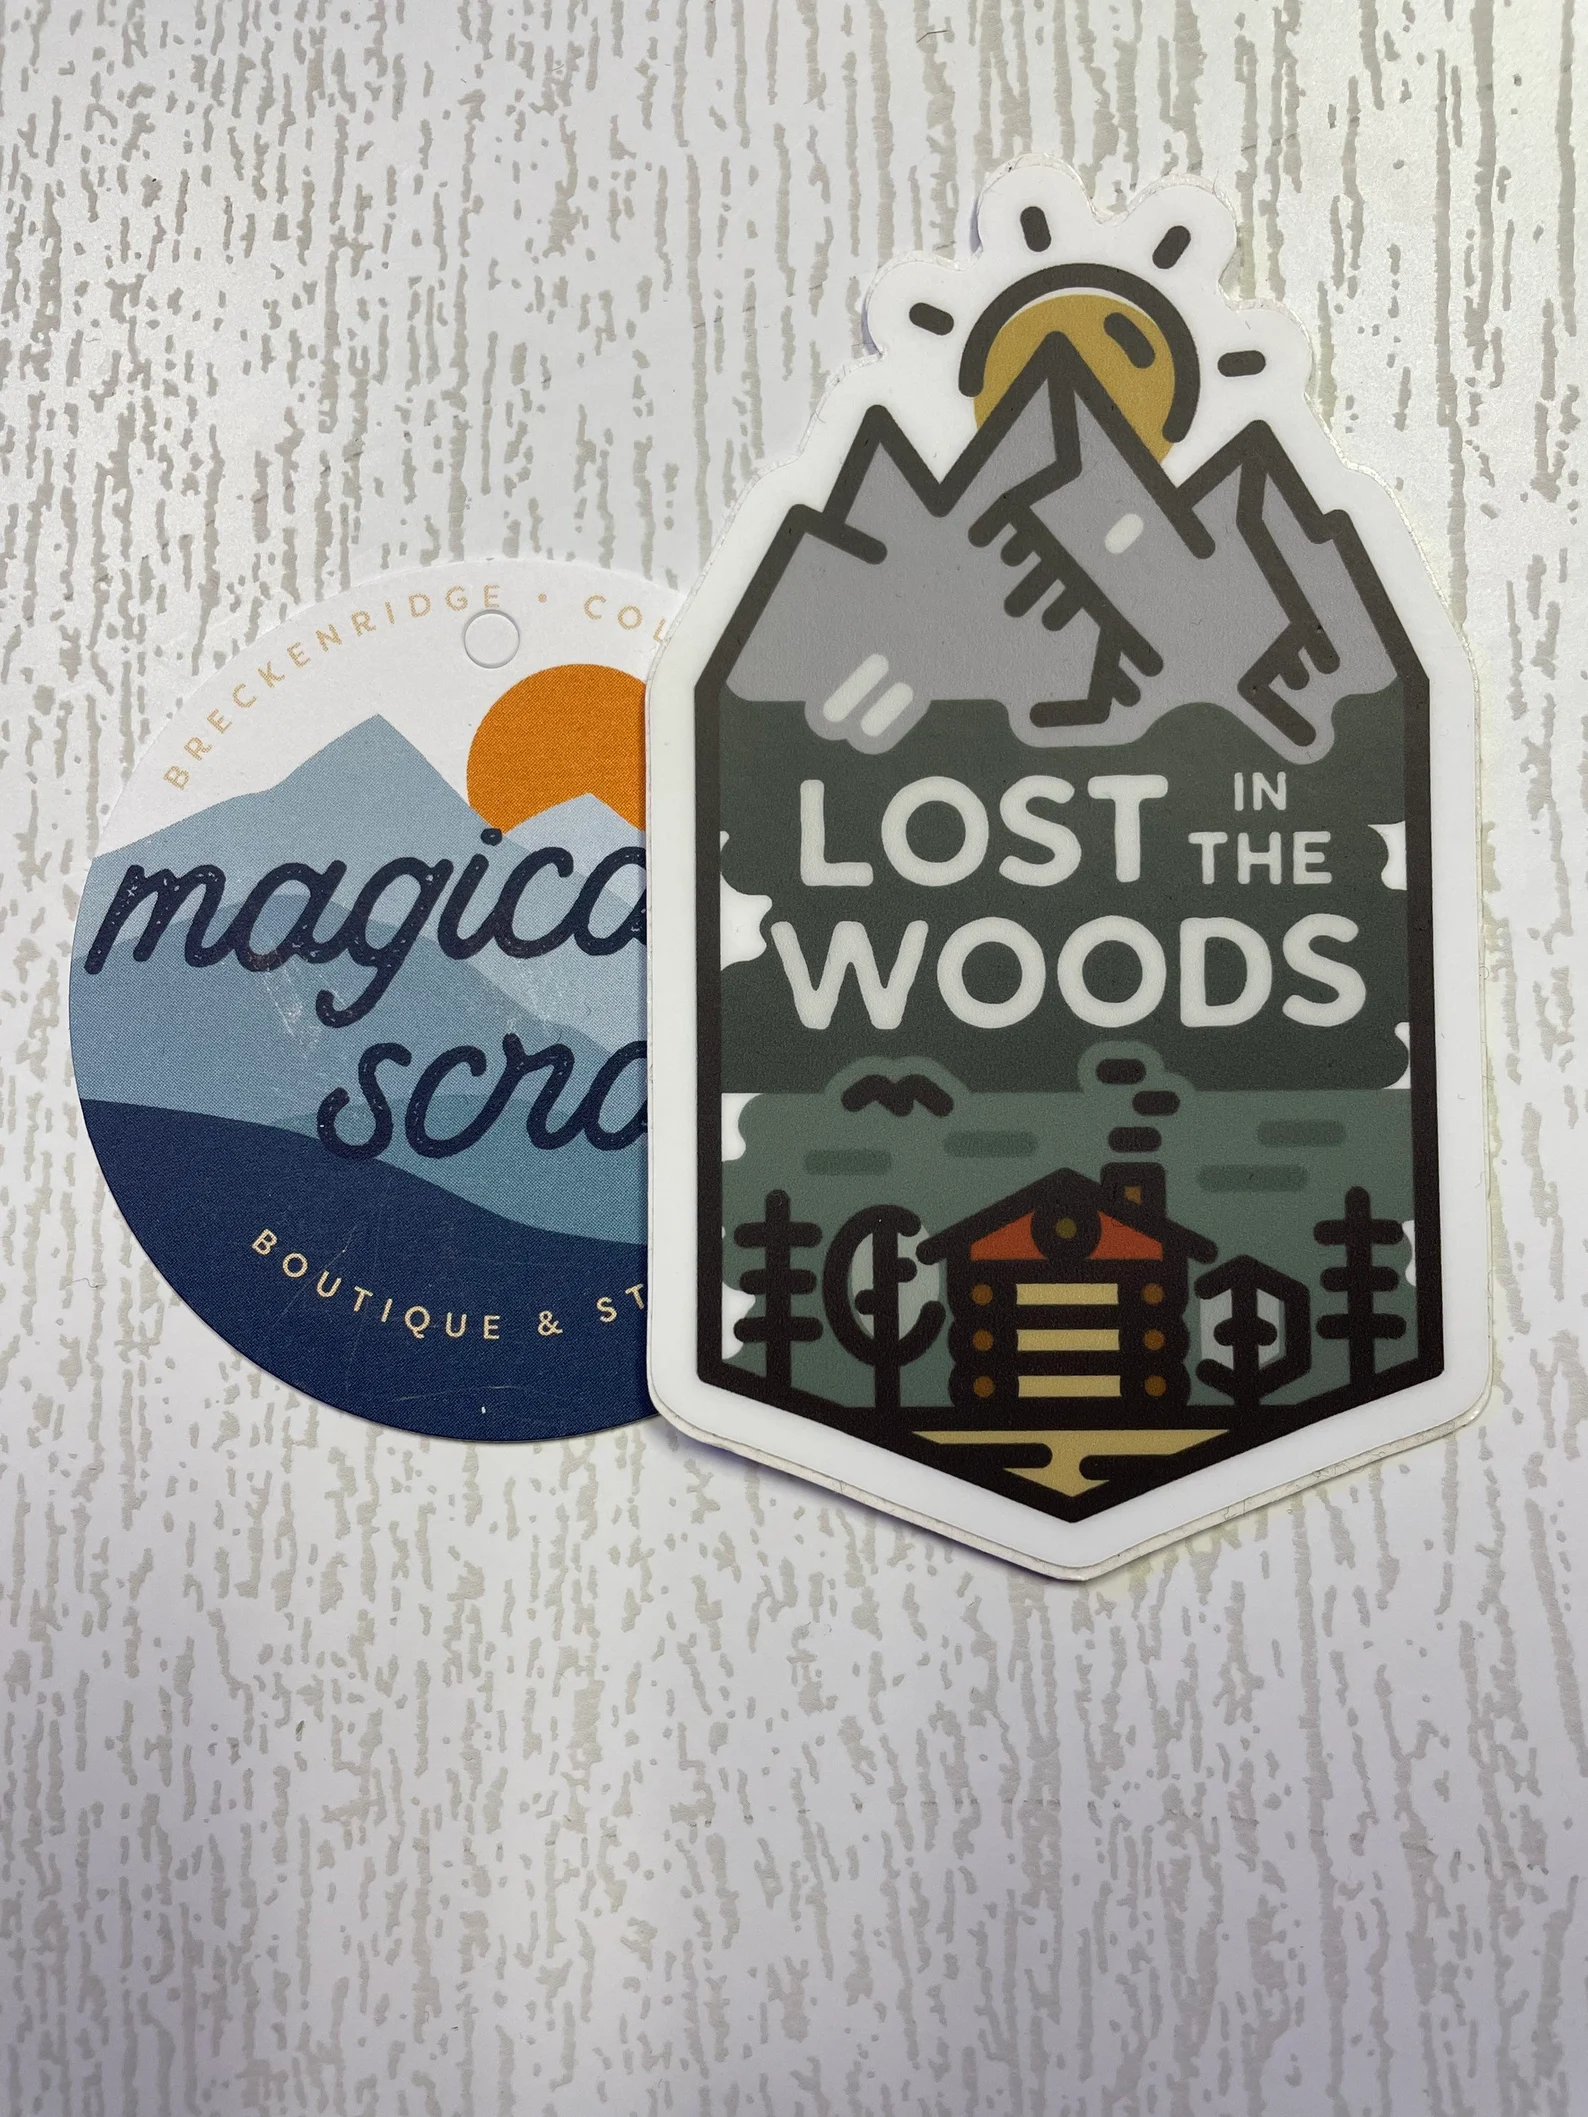 Lost in the woods vinyl sticker